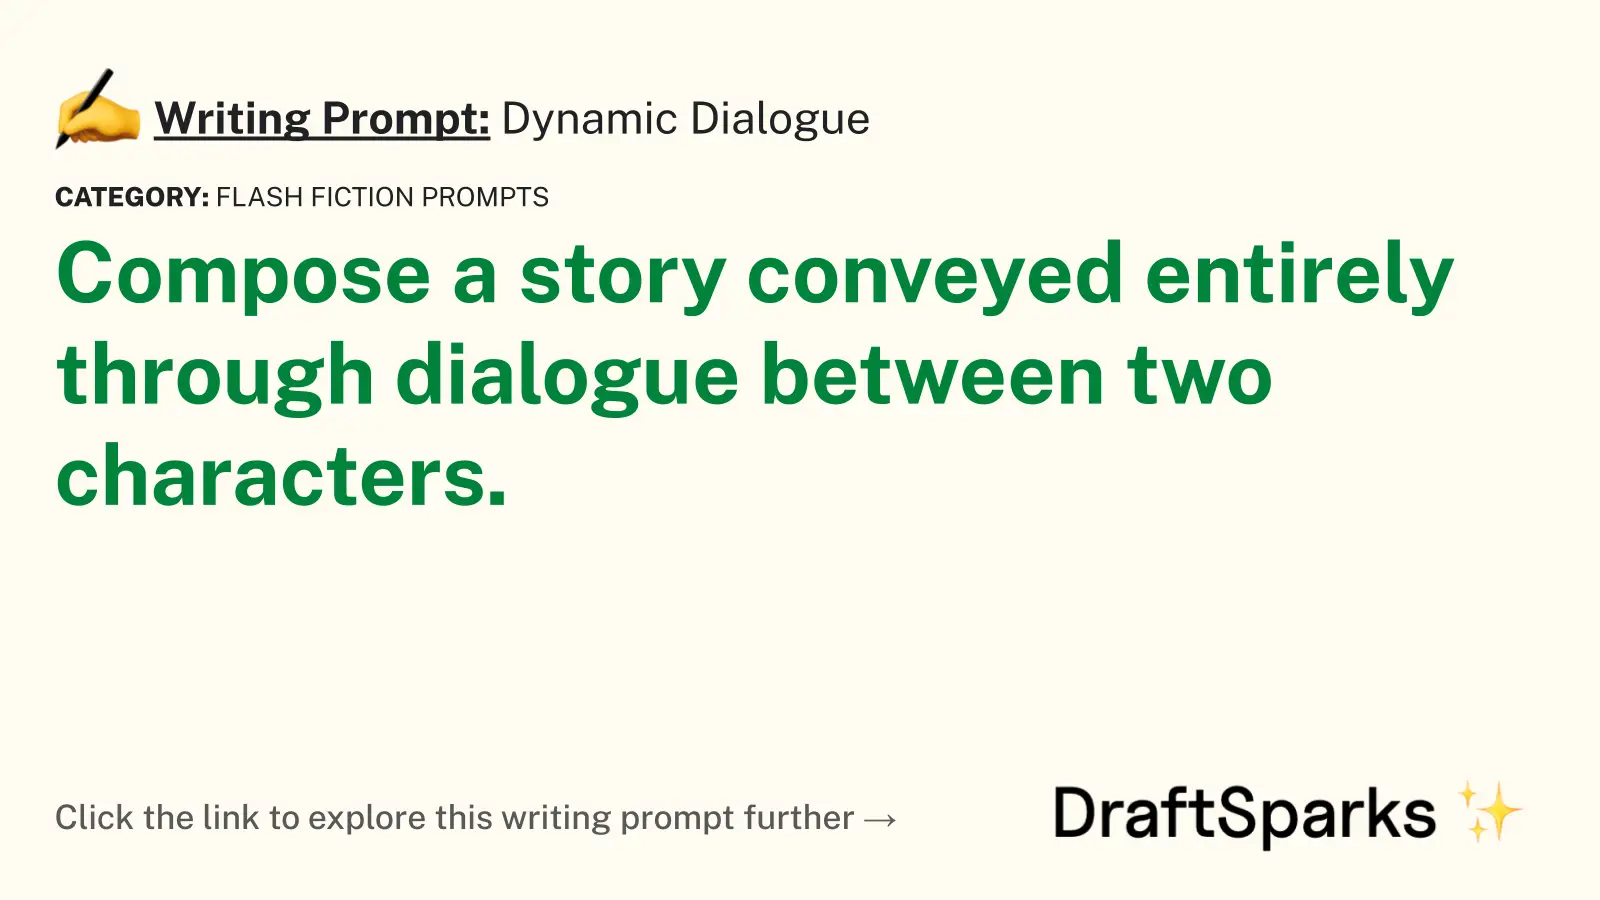 Dynamic Dialogue